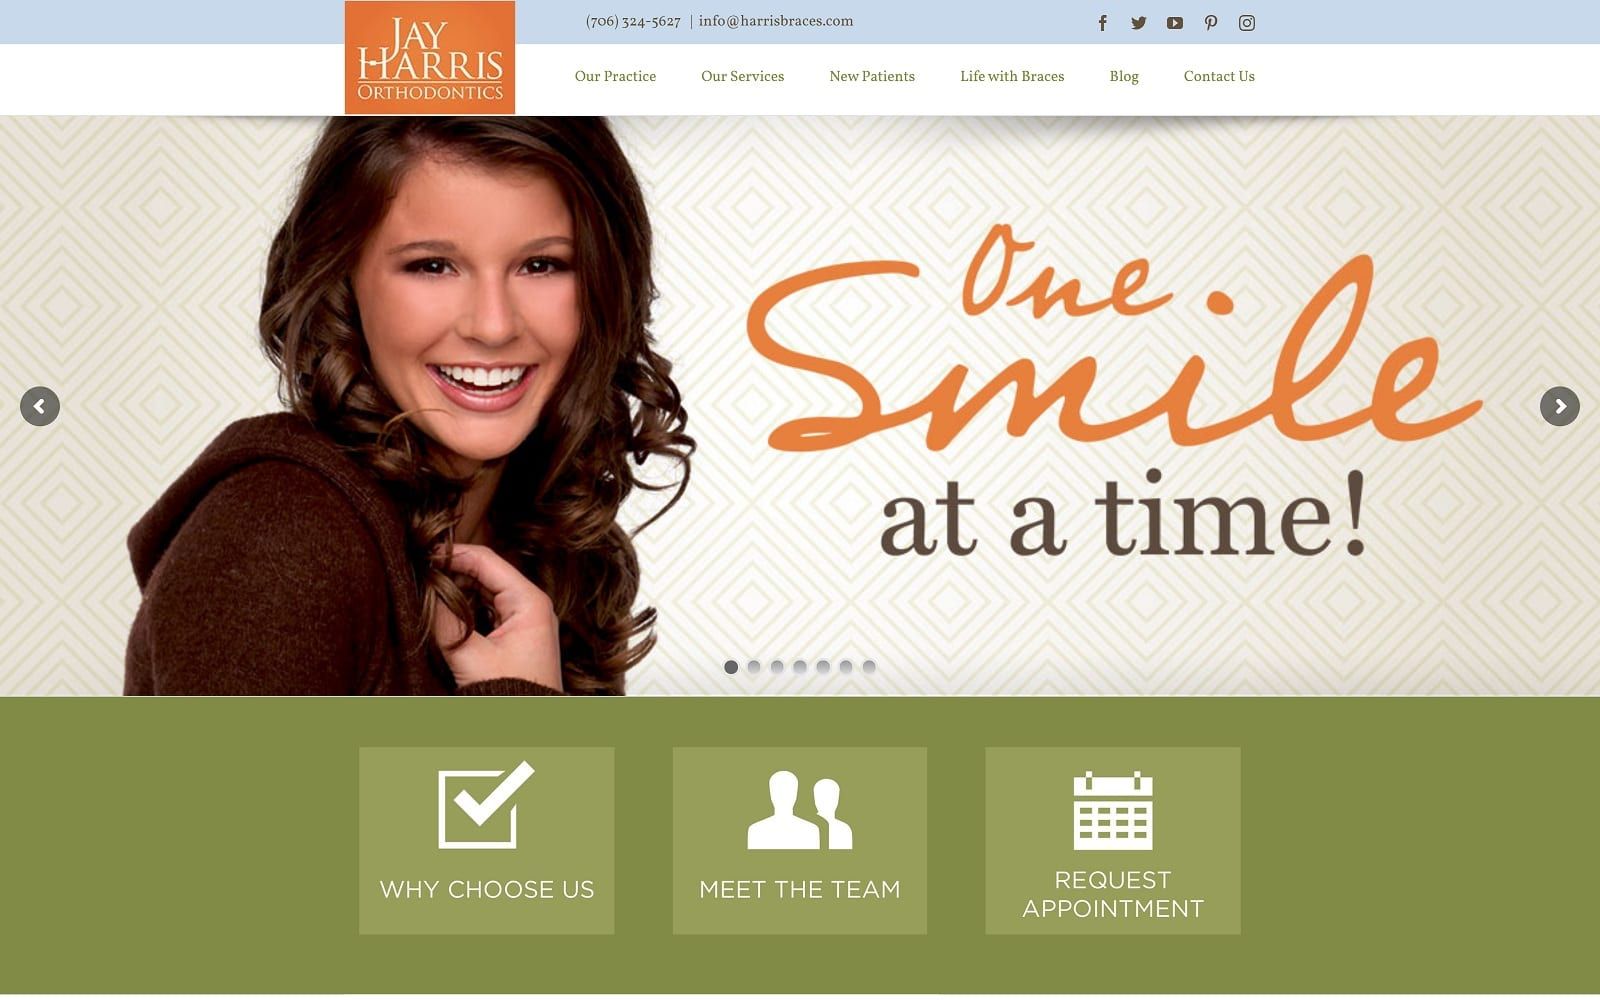 The screenshot of jay harris orthodontics harrisbraces. Com website